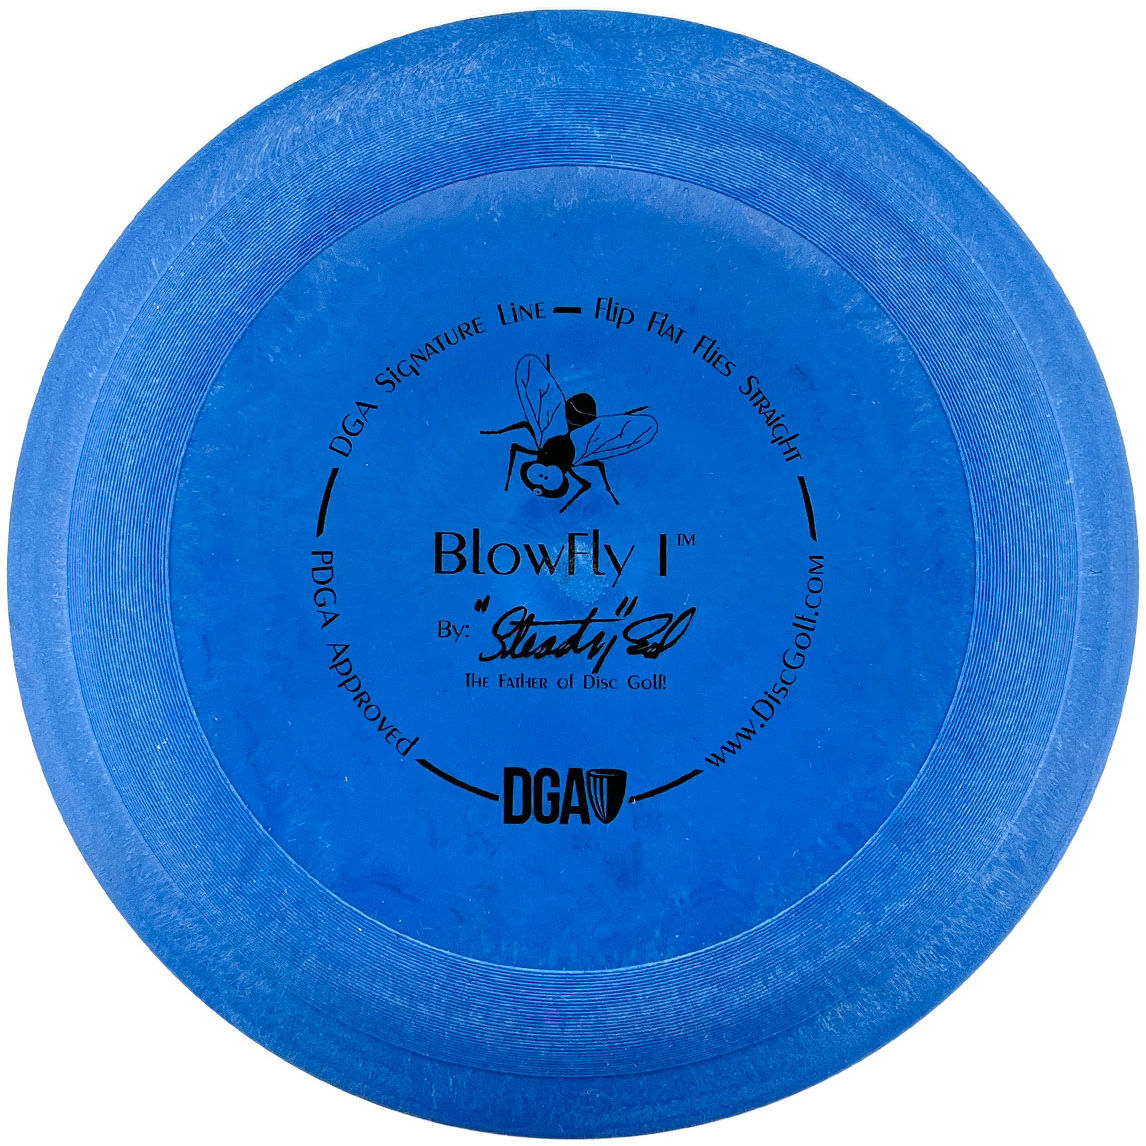 DGA Blowfly 1 Putter